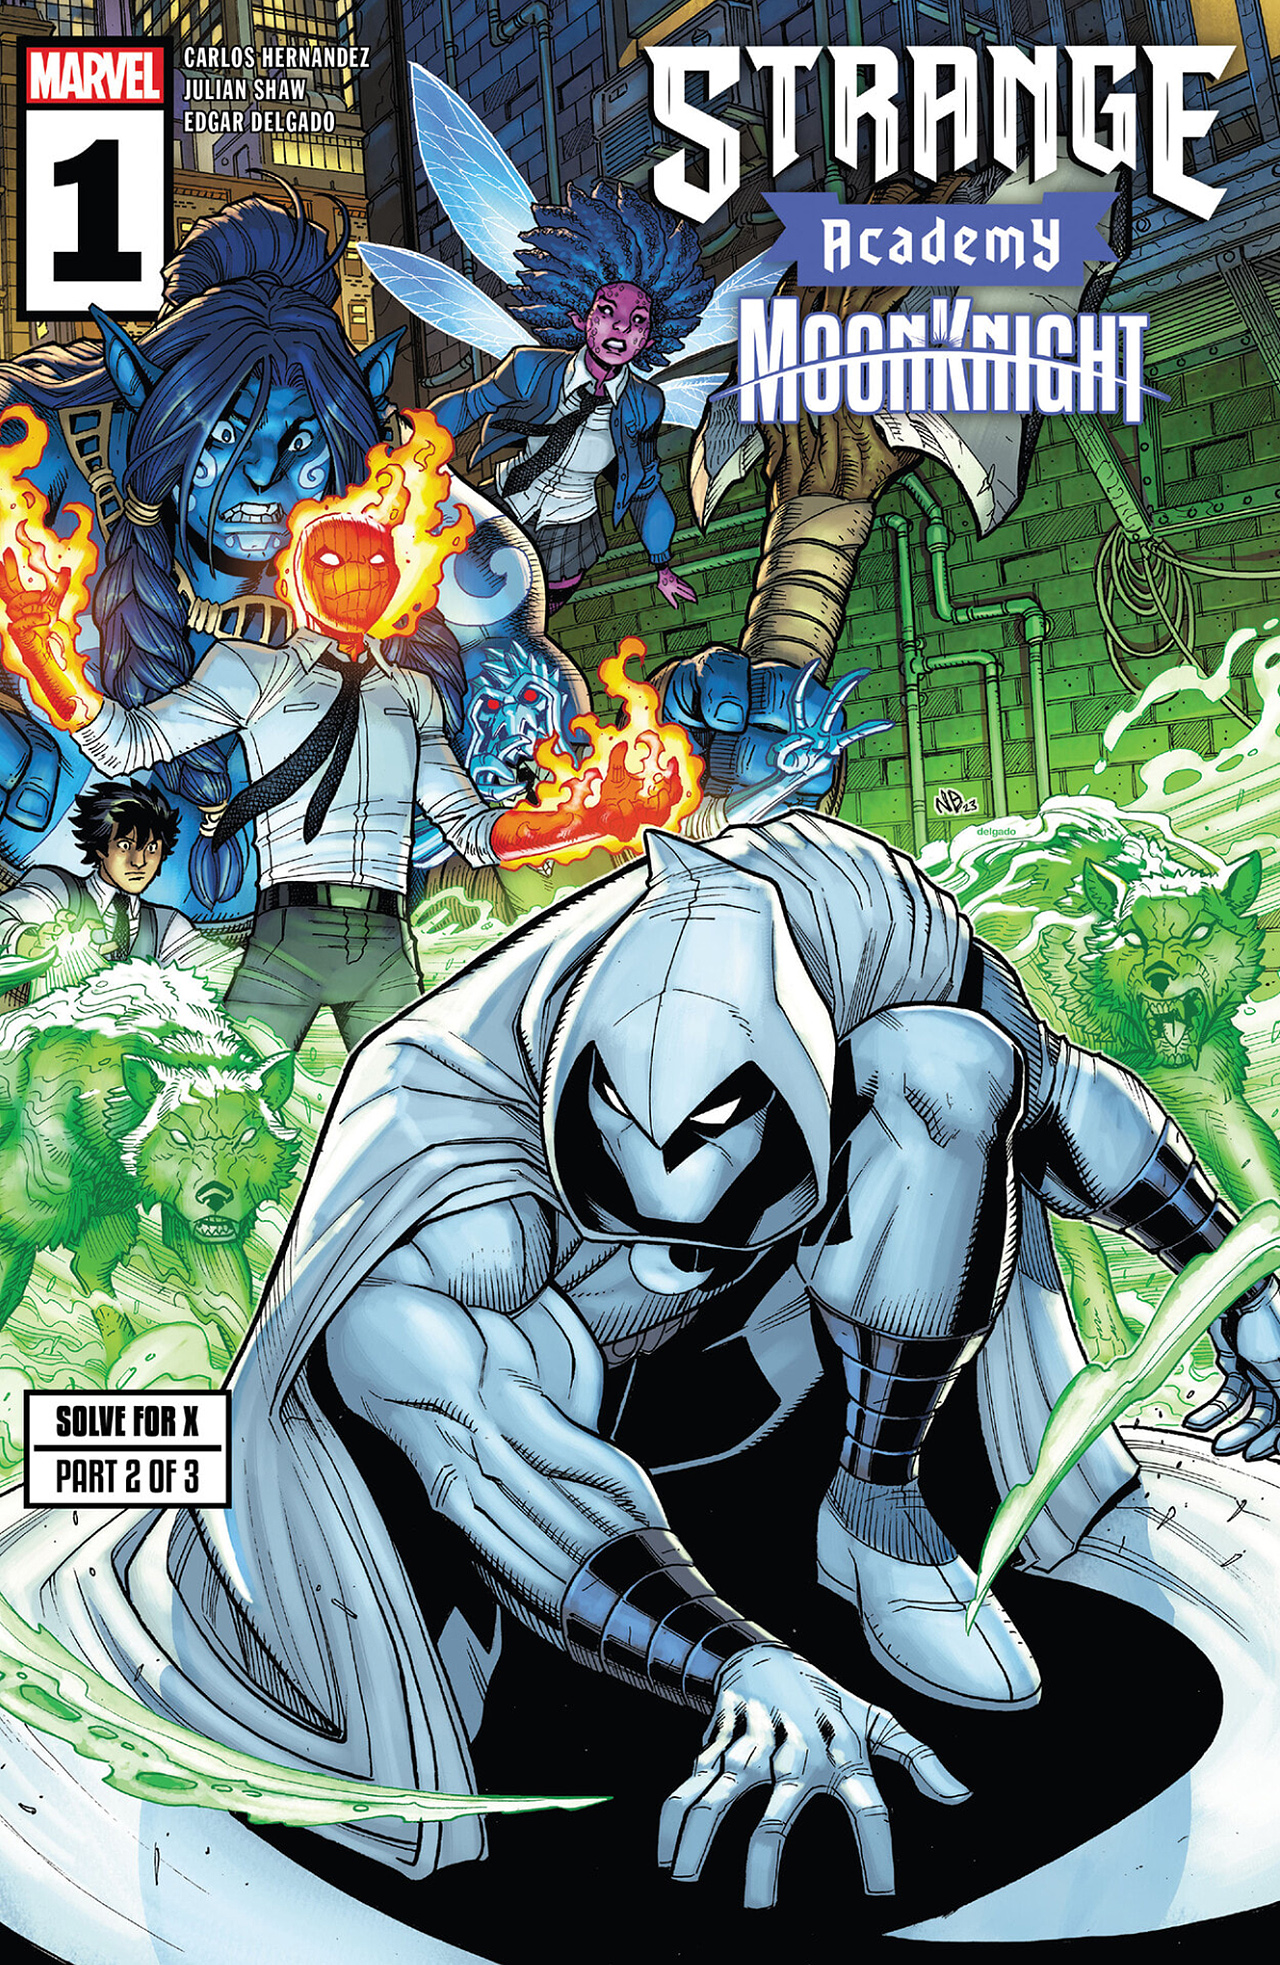 Read online Strange Academy: Moon Knight comic -  Issue #1 - 1